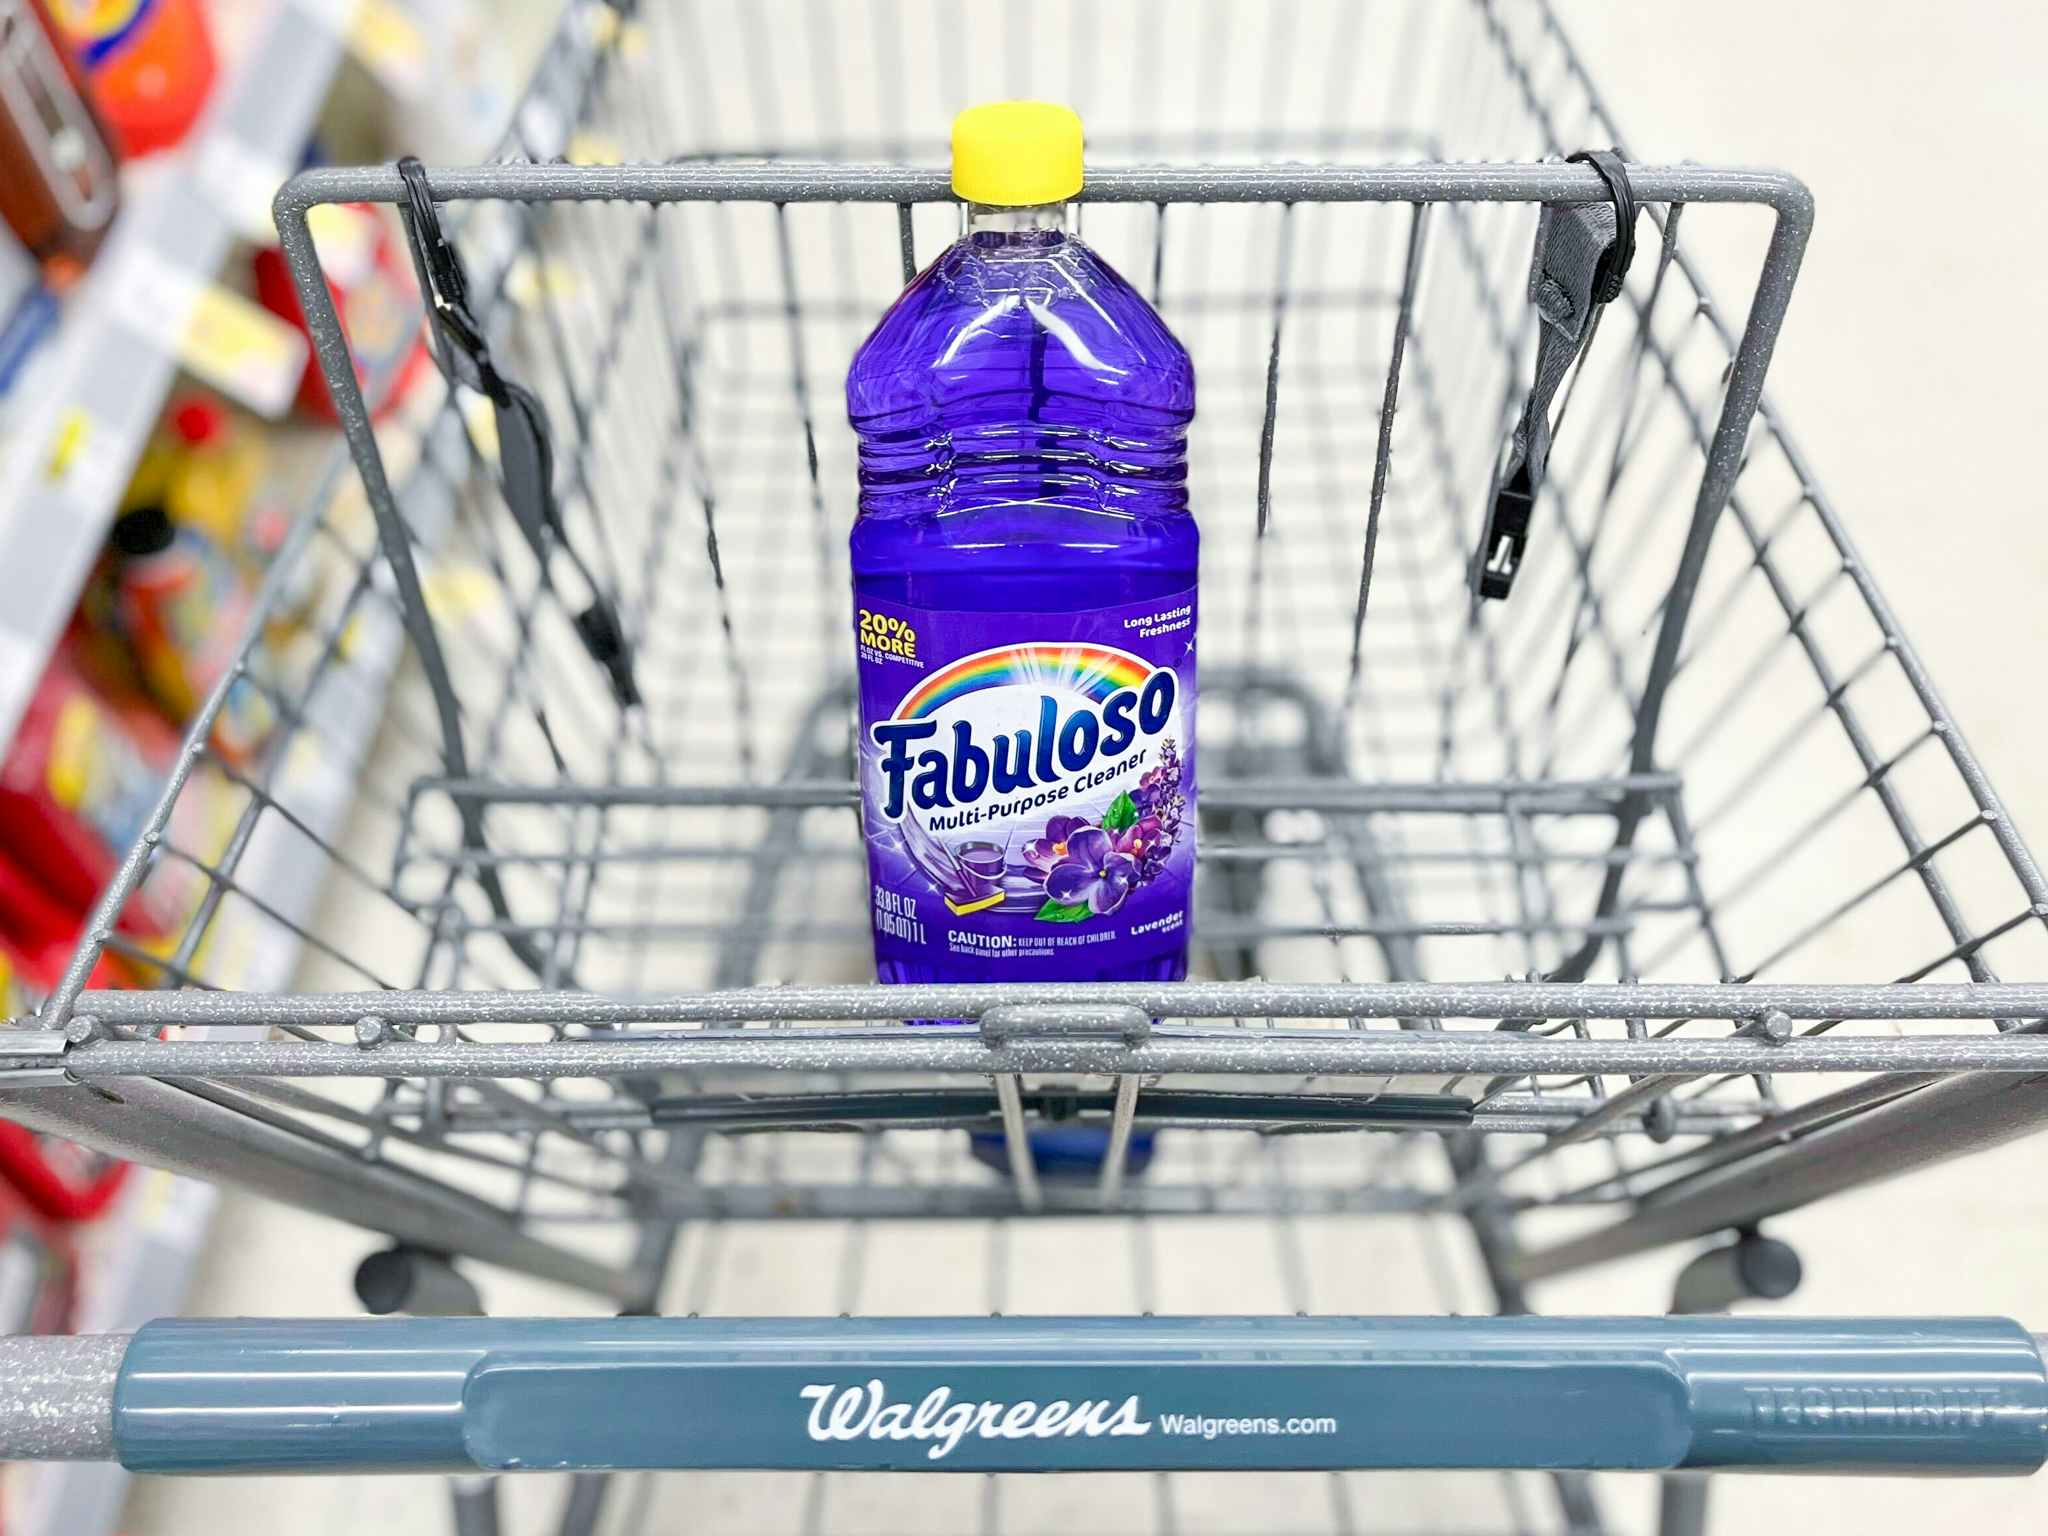 bottle of fabuloso in walgreens shopping cart